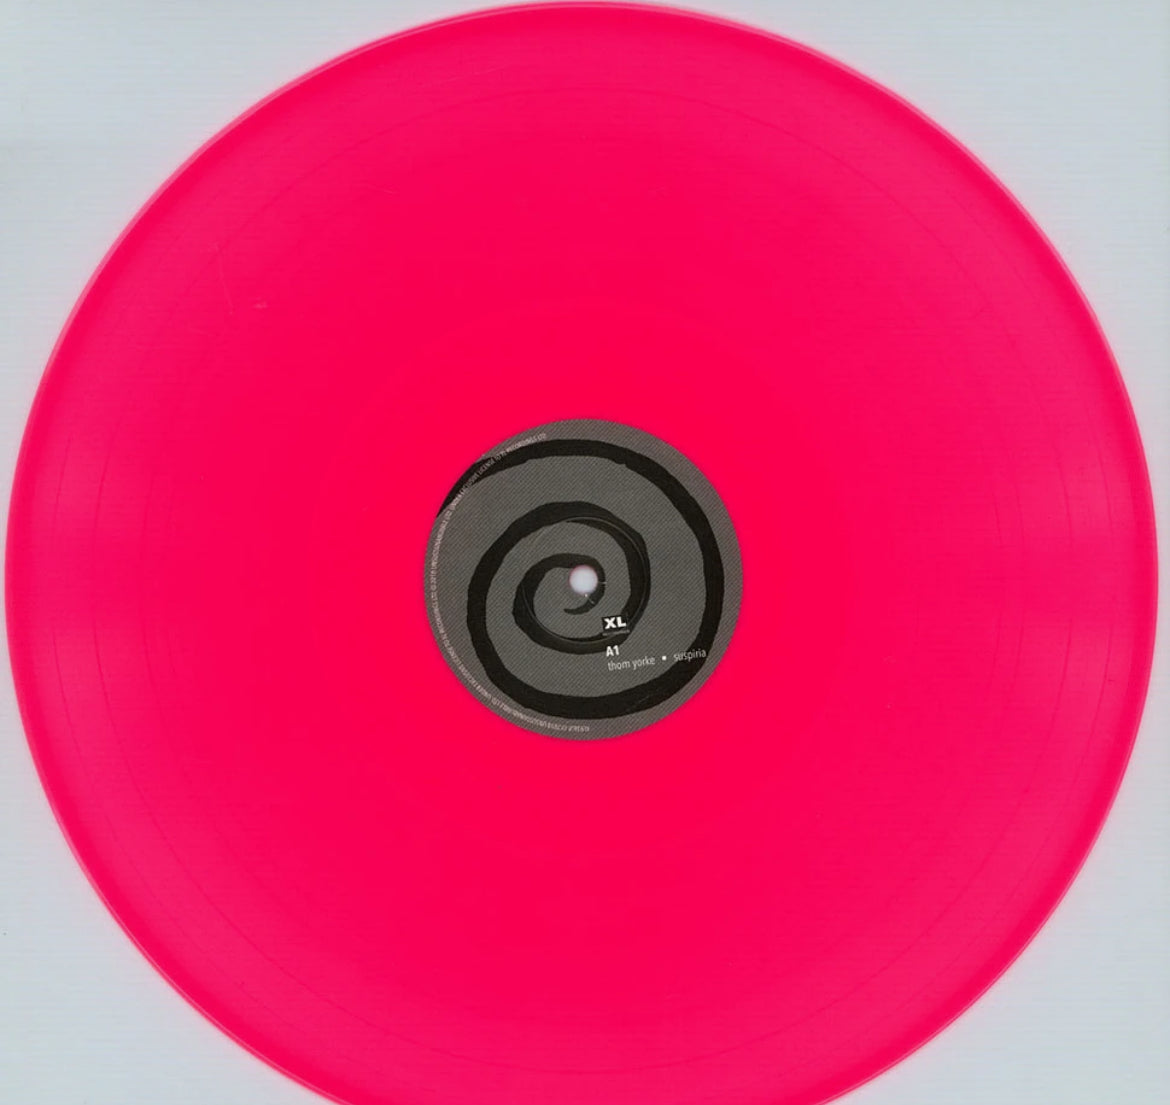 OST Suspiria - Music For The Luca Guadagnino Film Pink Vinyl Edition - Thom Yorke